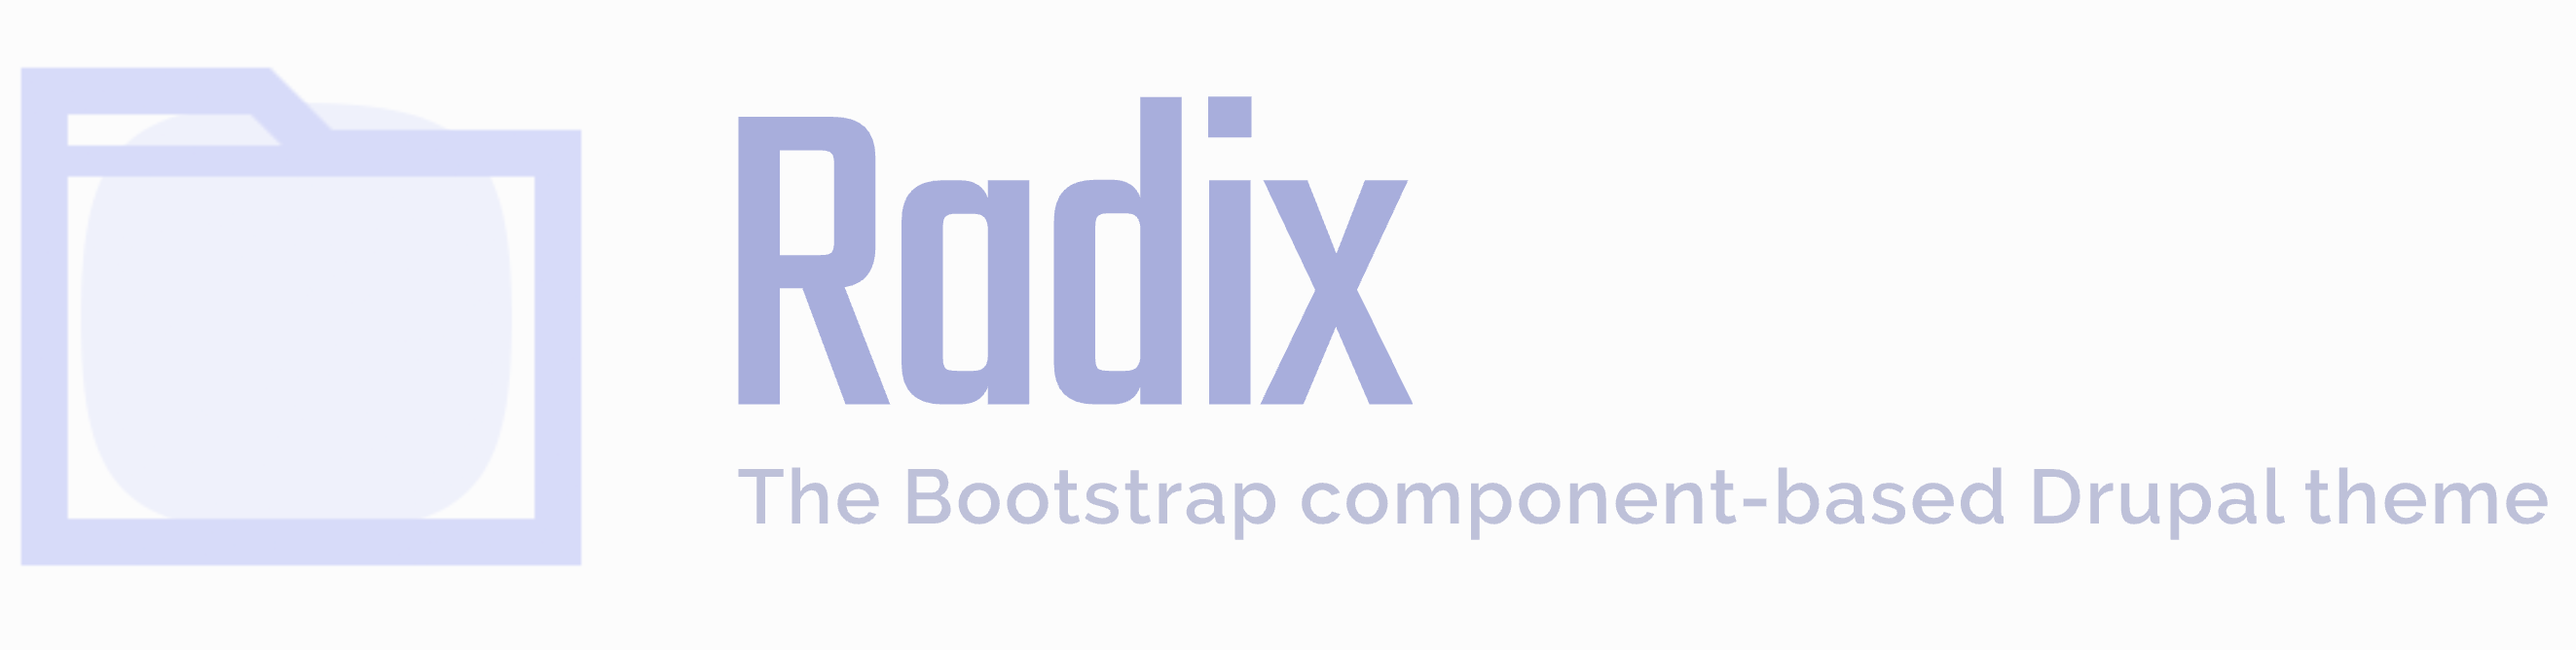 Radix, Drupal component-based bootstrap theme